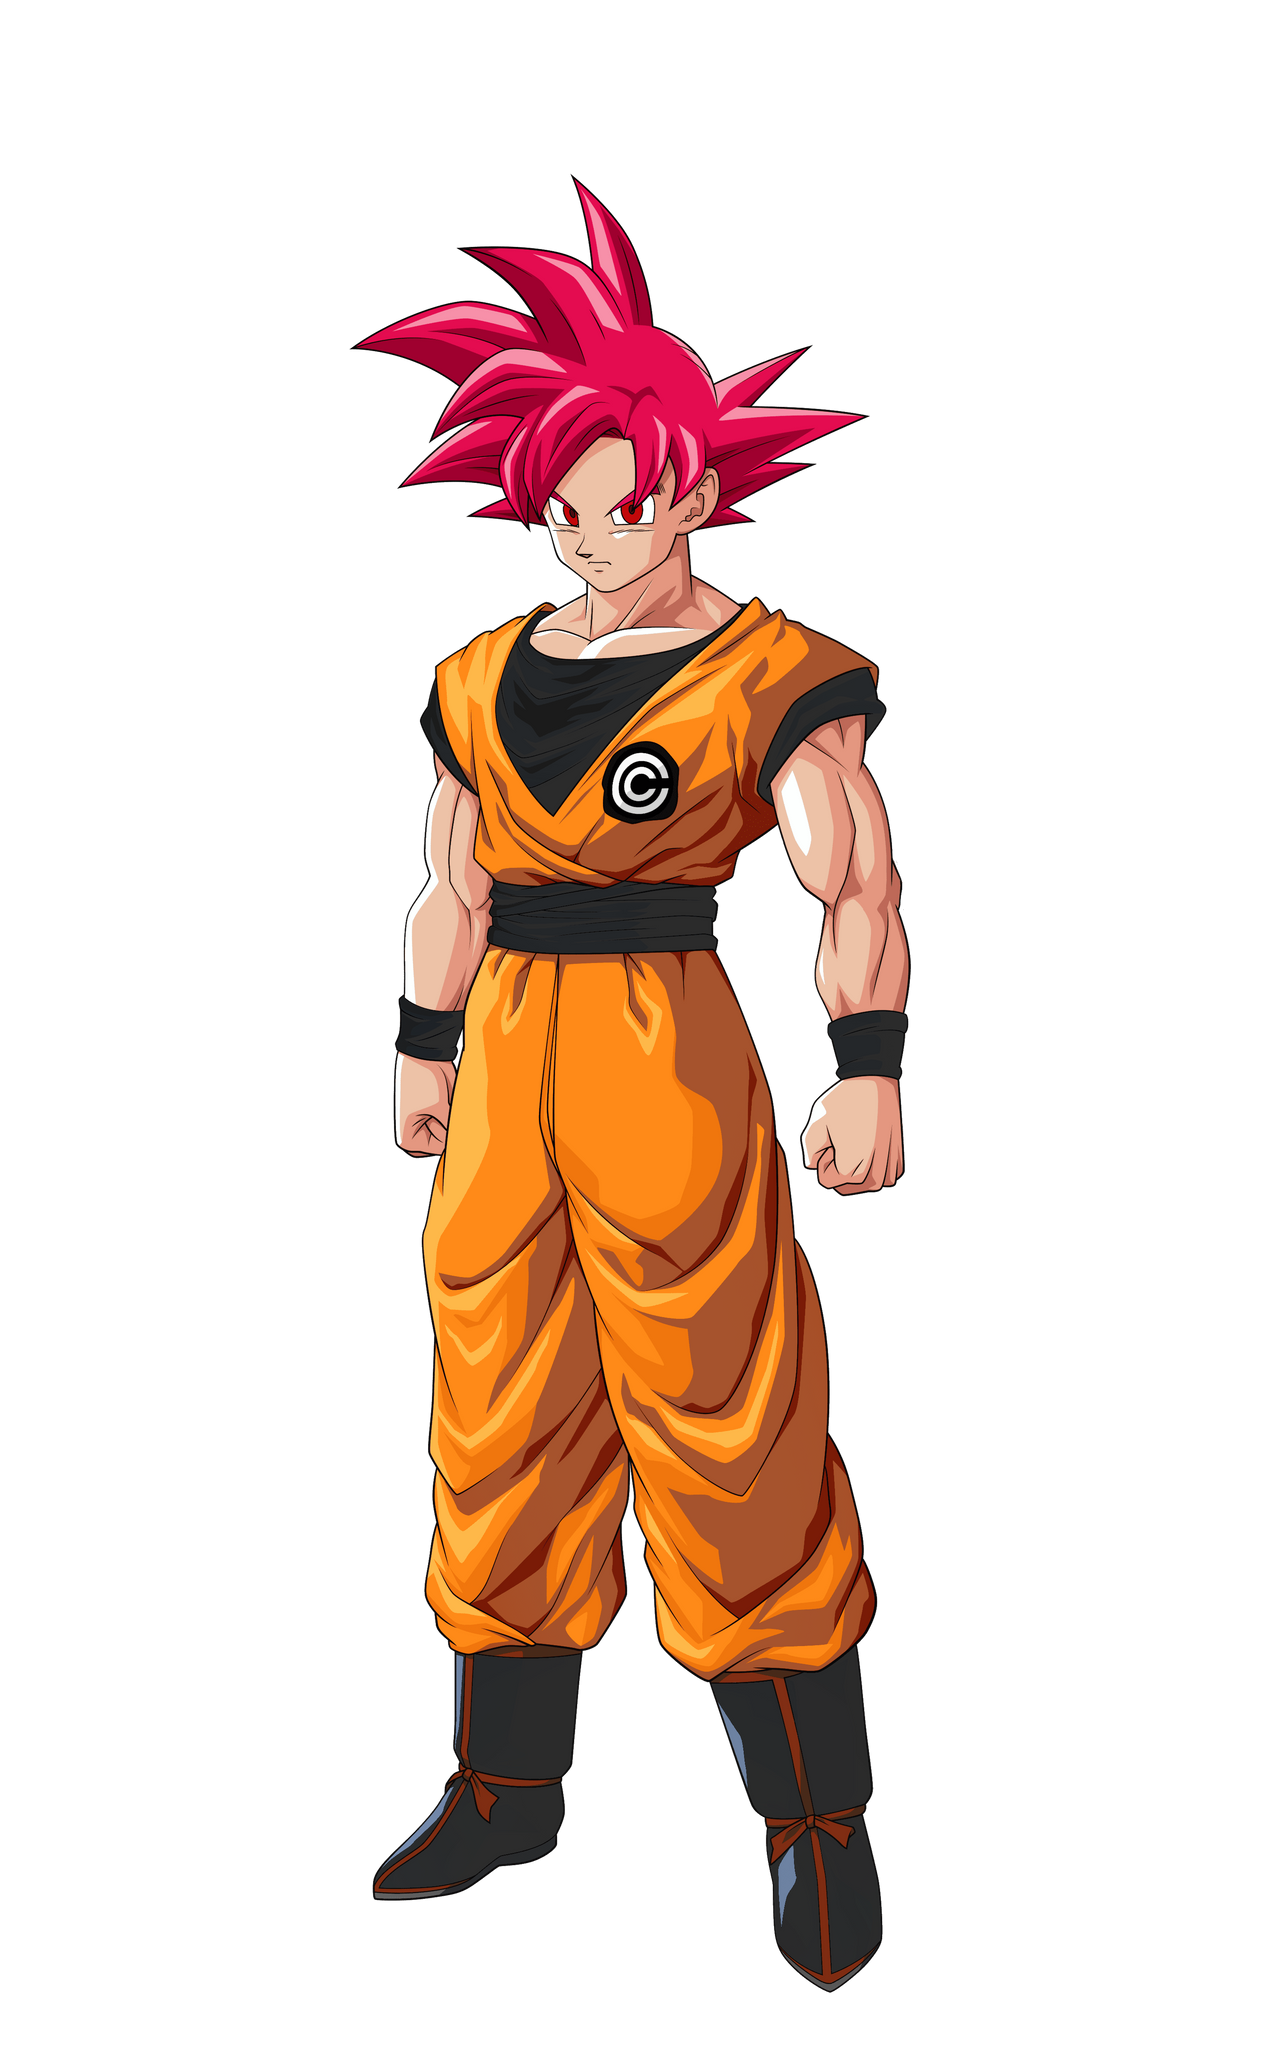 Goku Big Bang Mission Super Saiyan God by yutori837 on DeviantArt